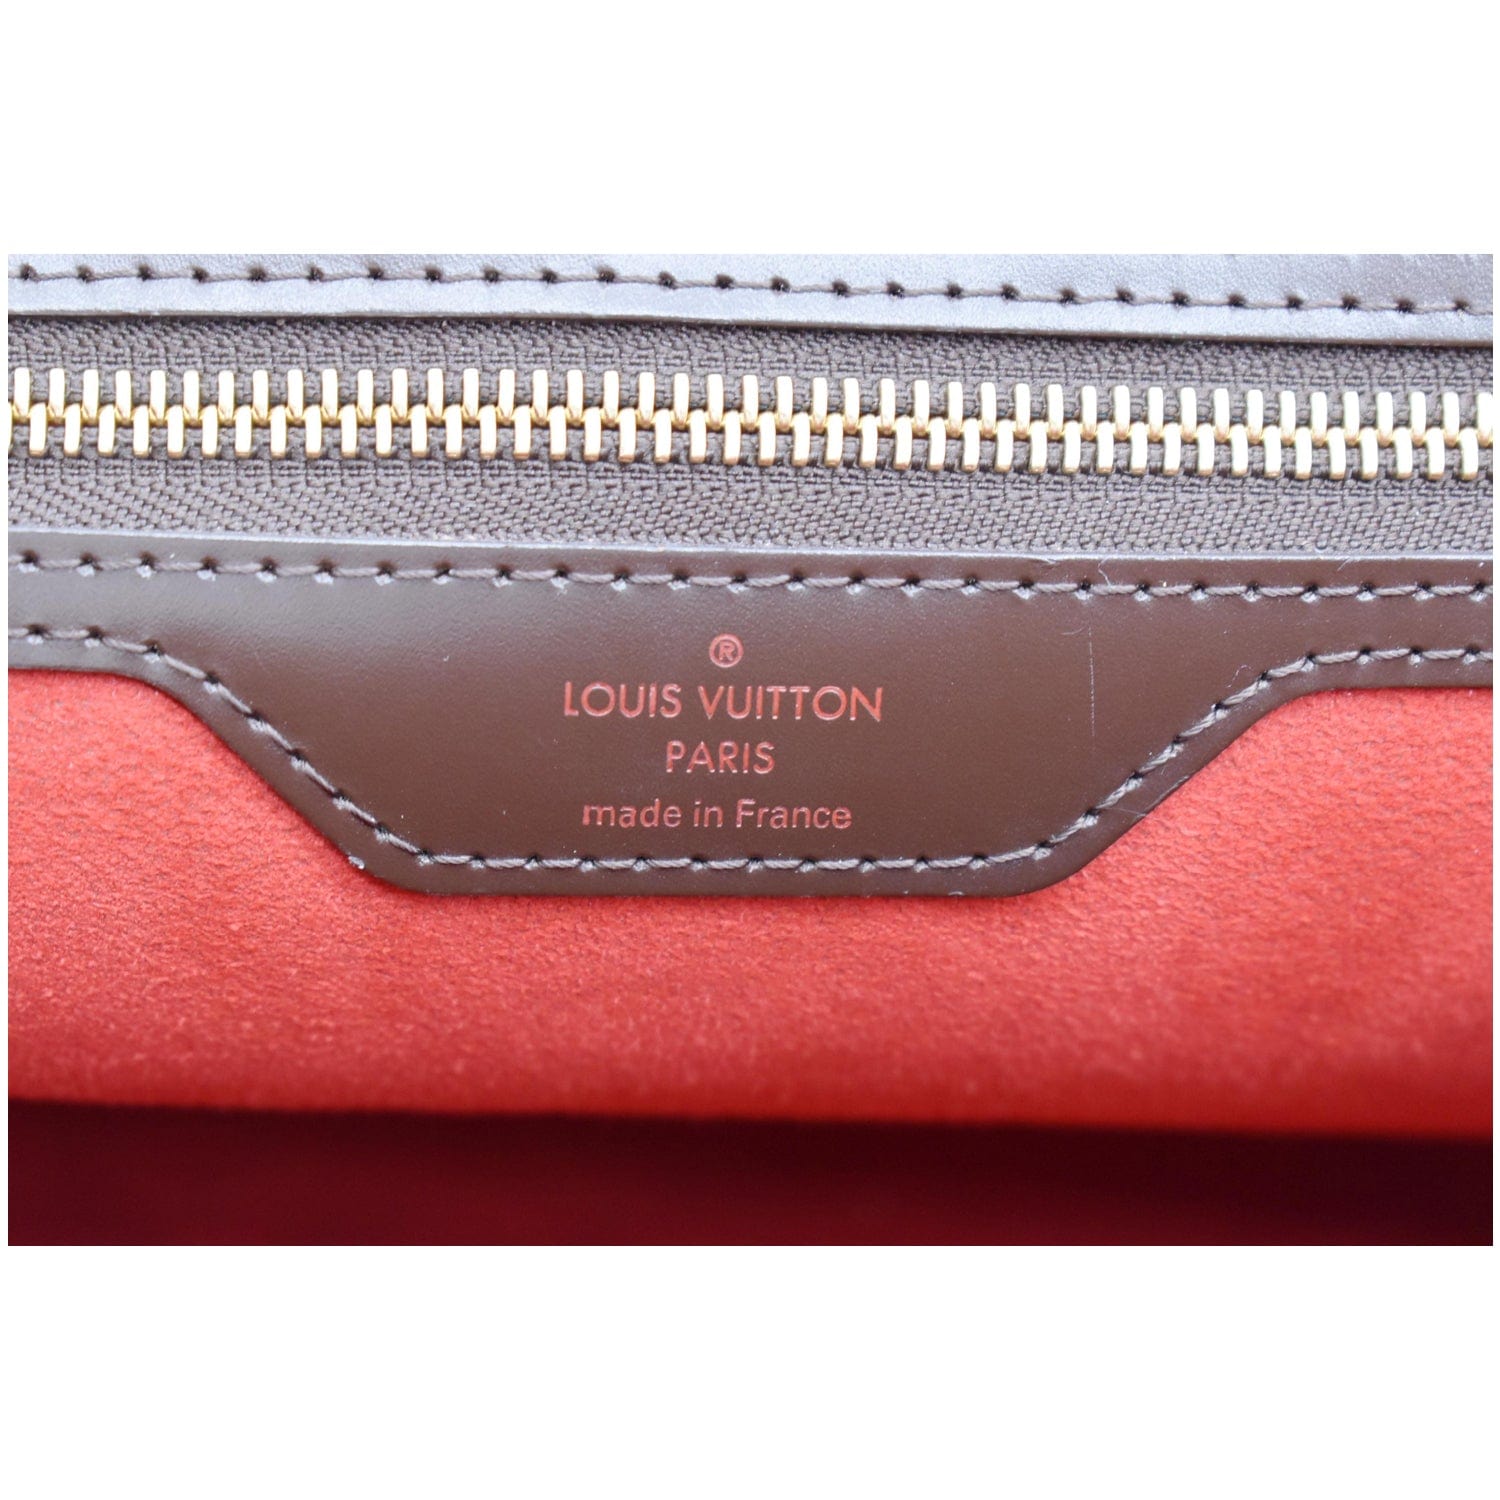 Wear and Tear* Louis Vuitton Damier Ebene Bergamo GM